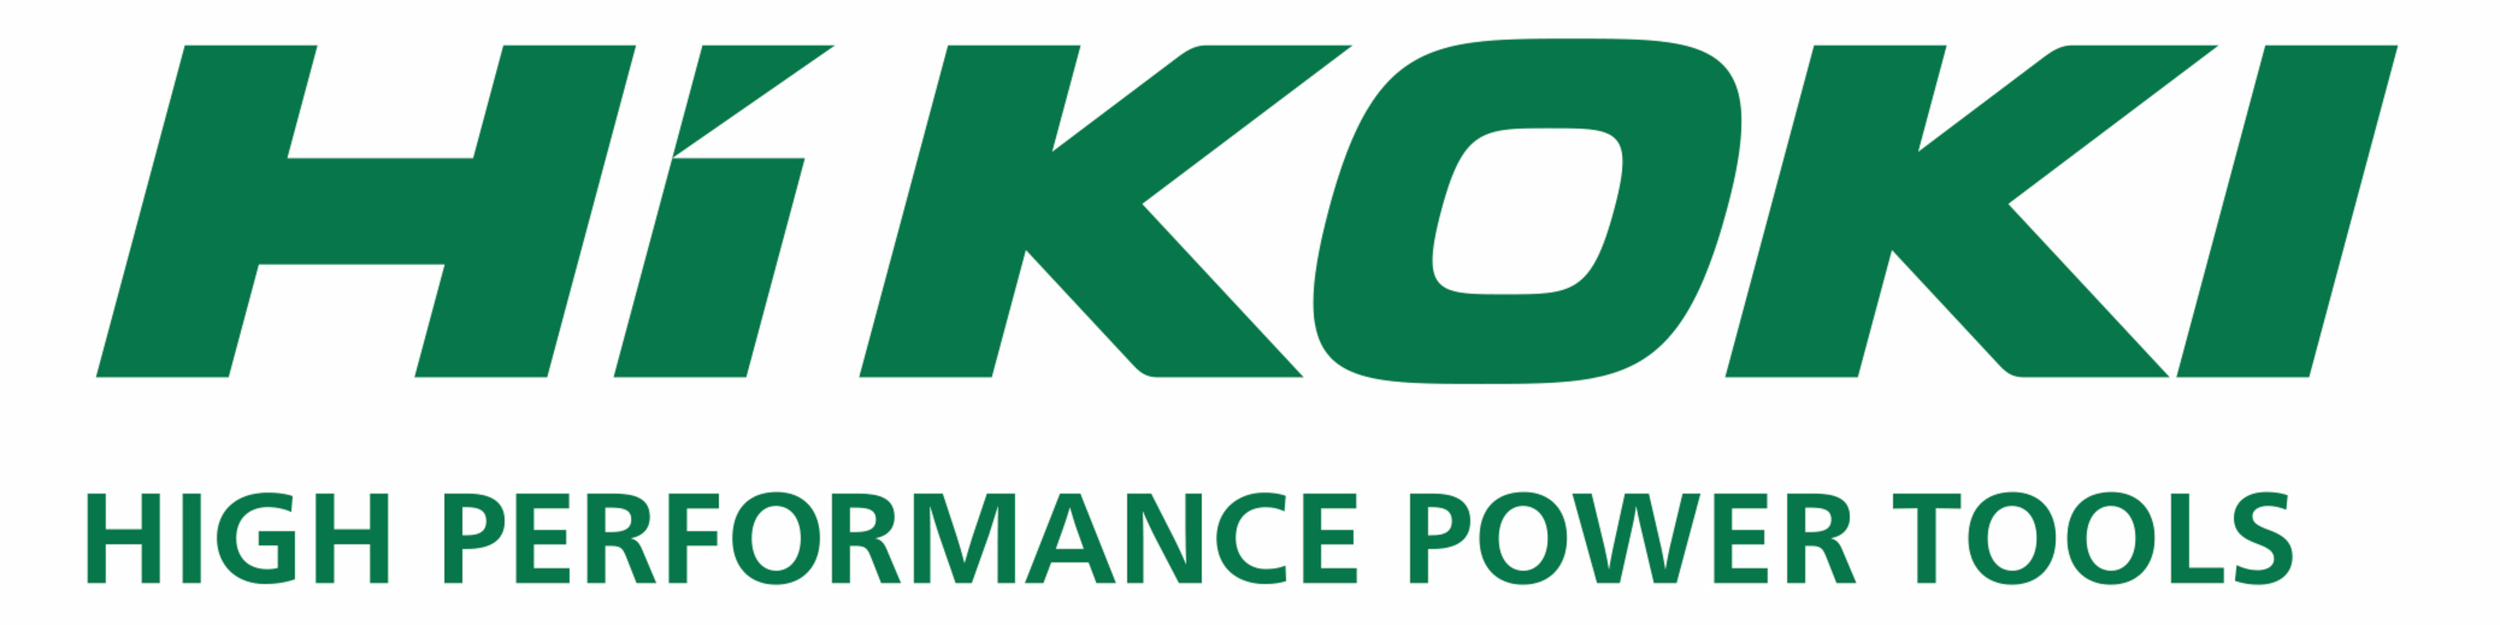 HiKOKI High Performance Power Tools_Green_JPG.png